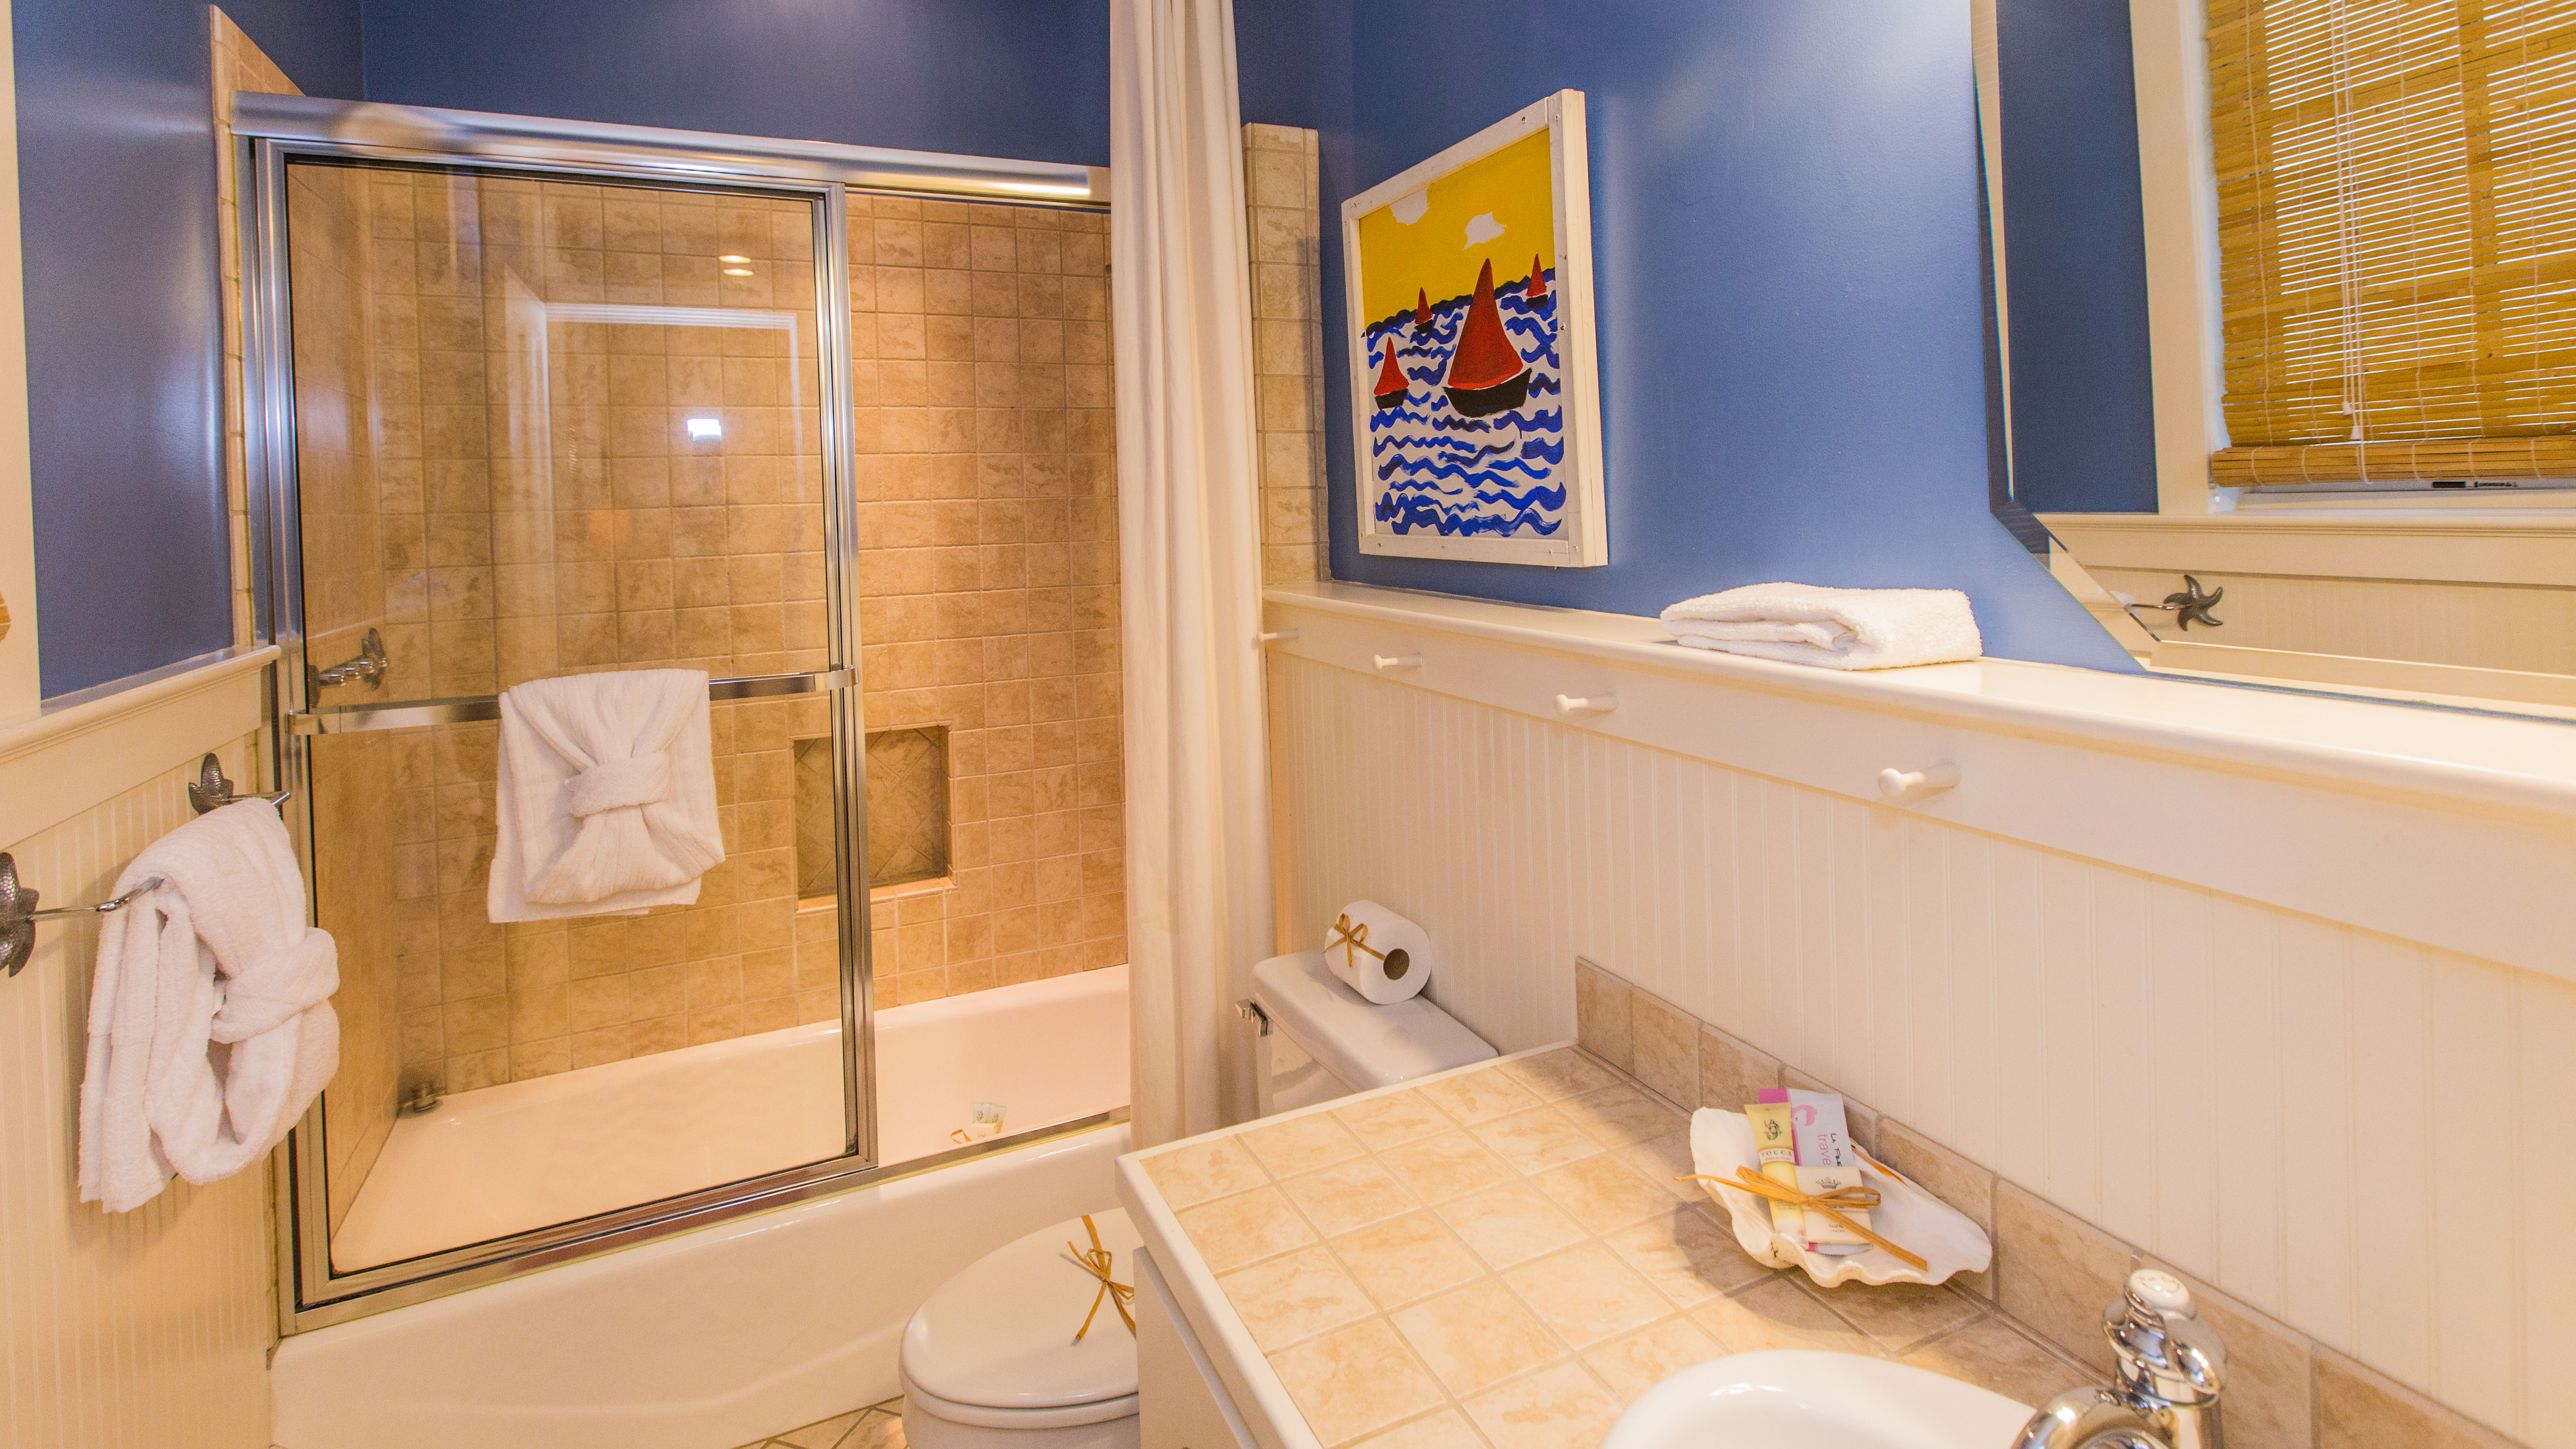 En suite bath has tub/shower combination